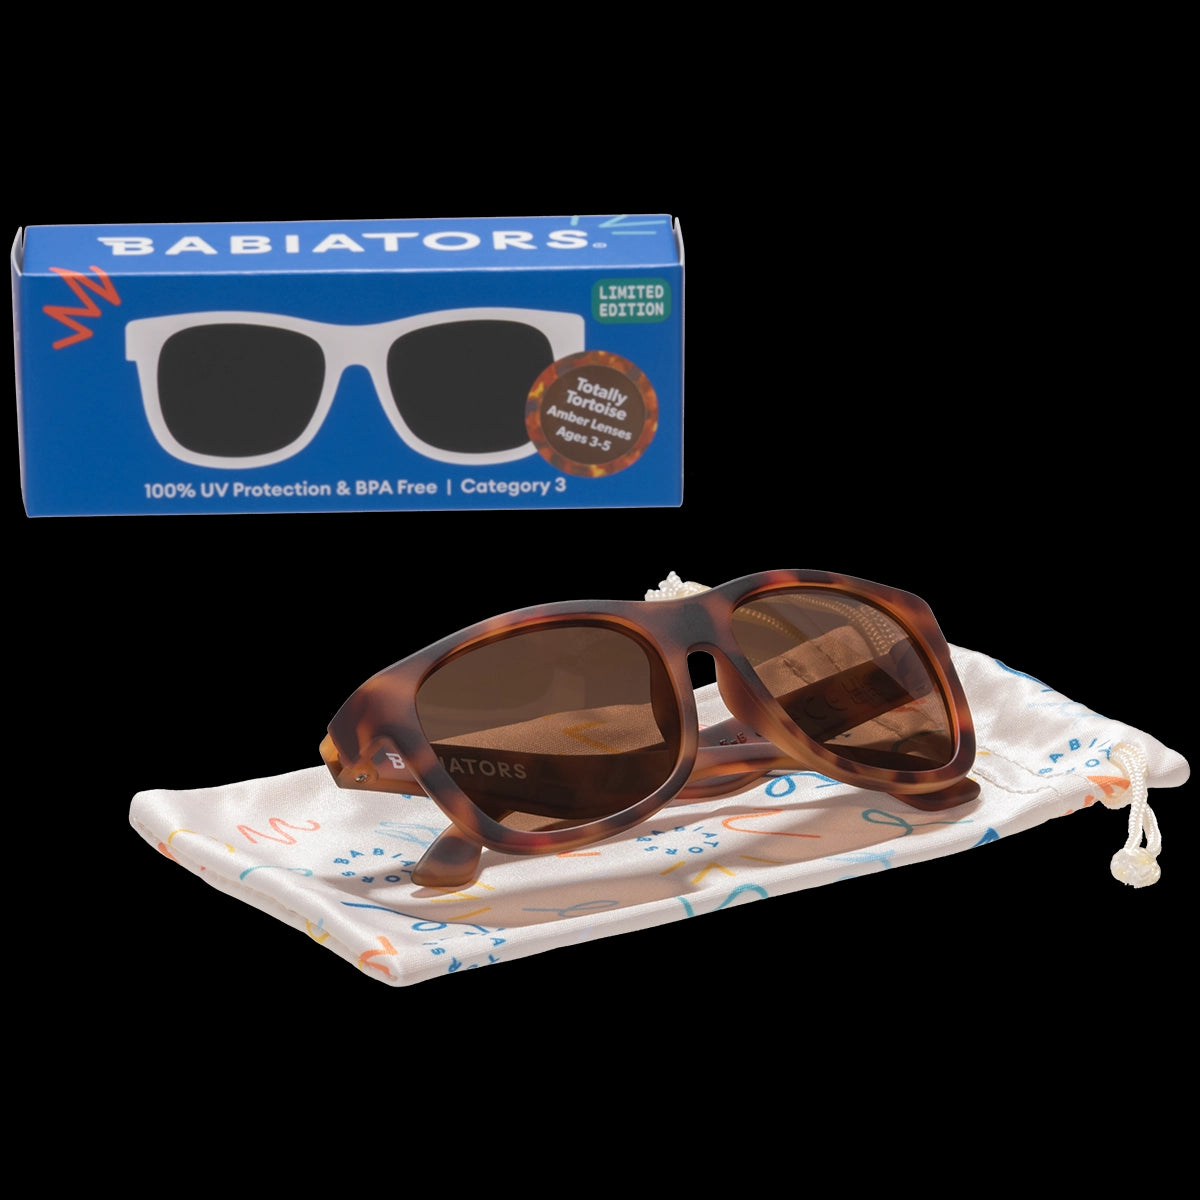 Babiators Original Navigator Sunglasses / Limited Edition